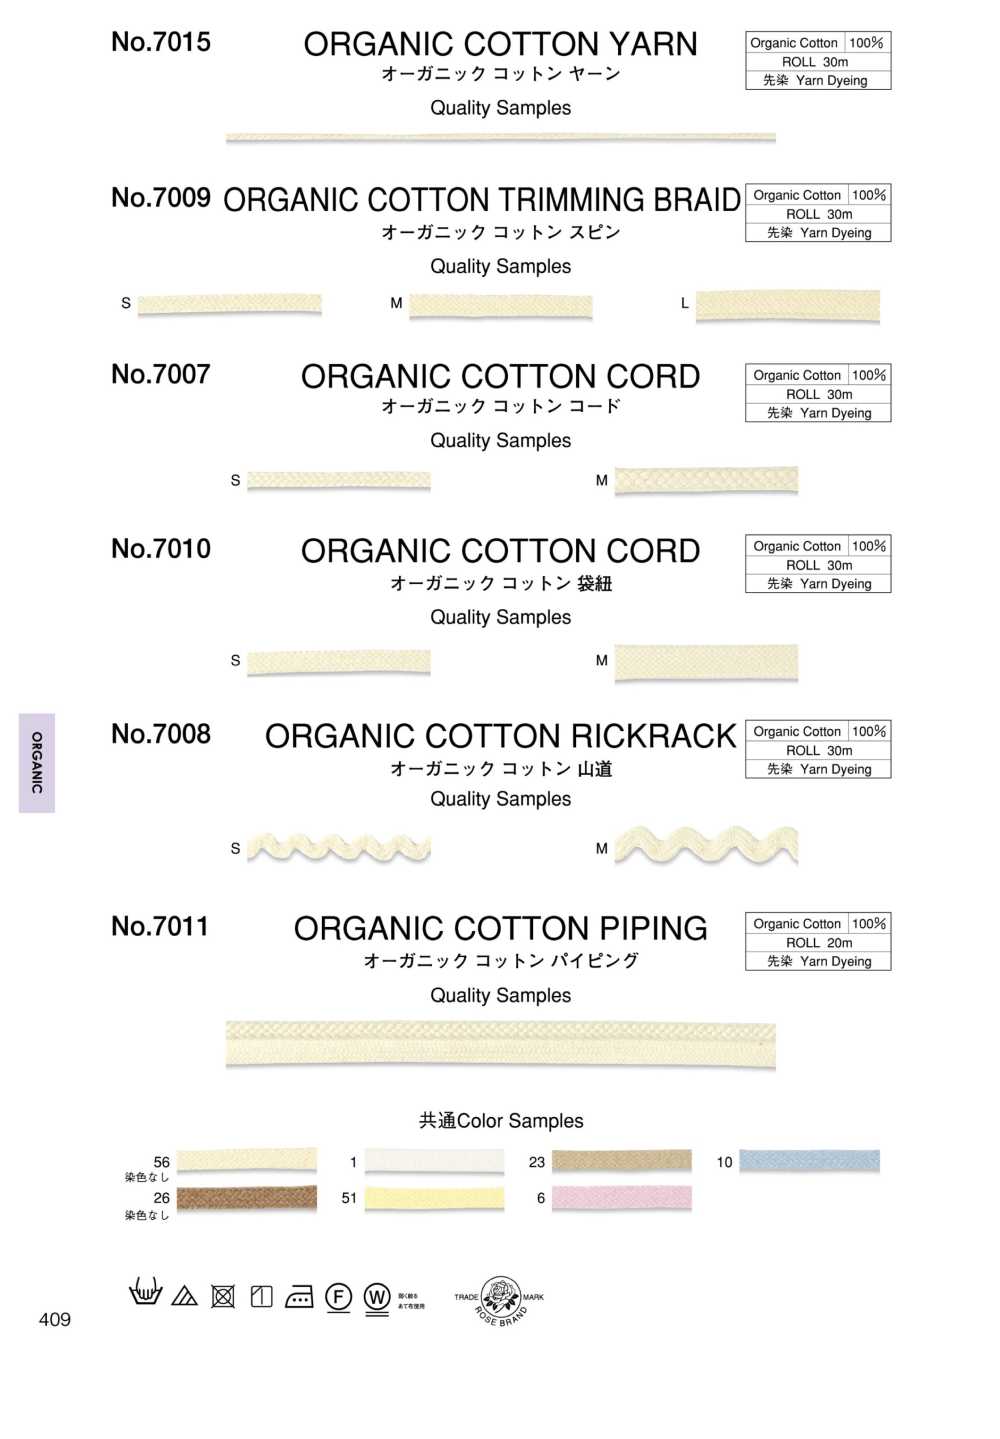 7011 Organic Cotton Piping[Ribbon Tape Cord] ROSE BRAND (Marushin)